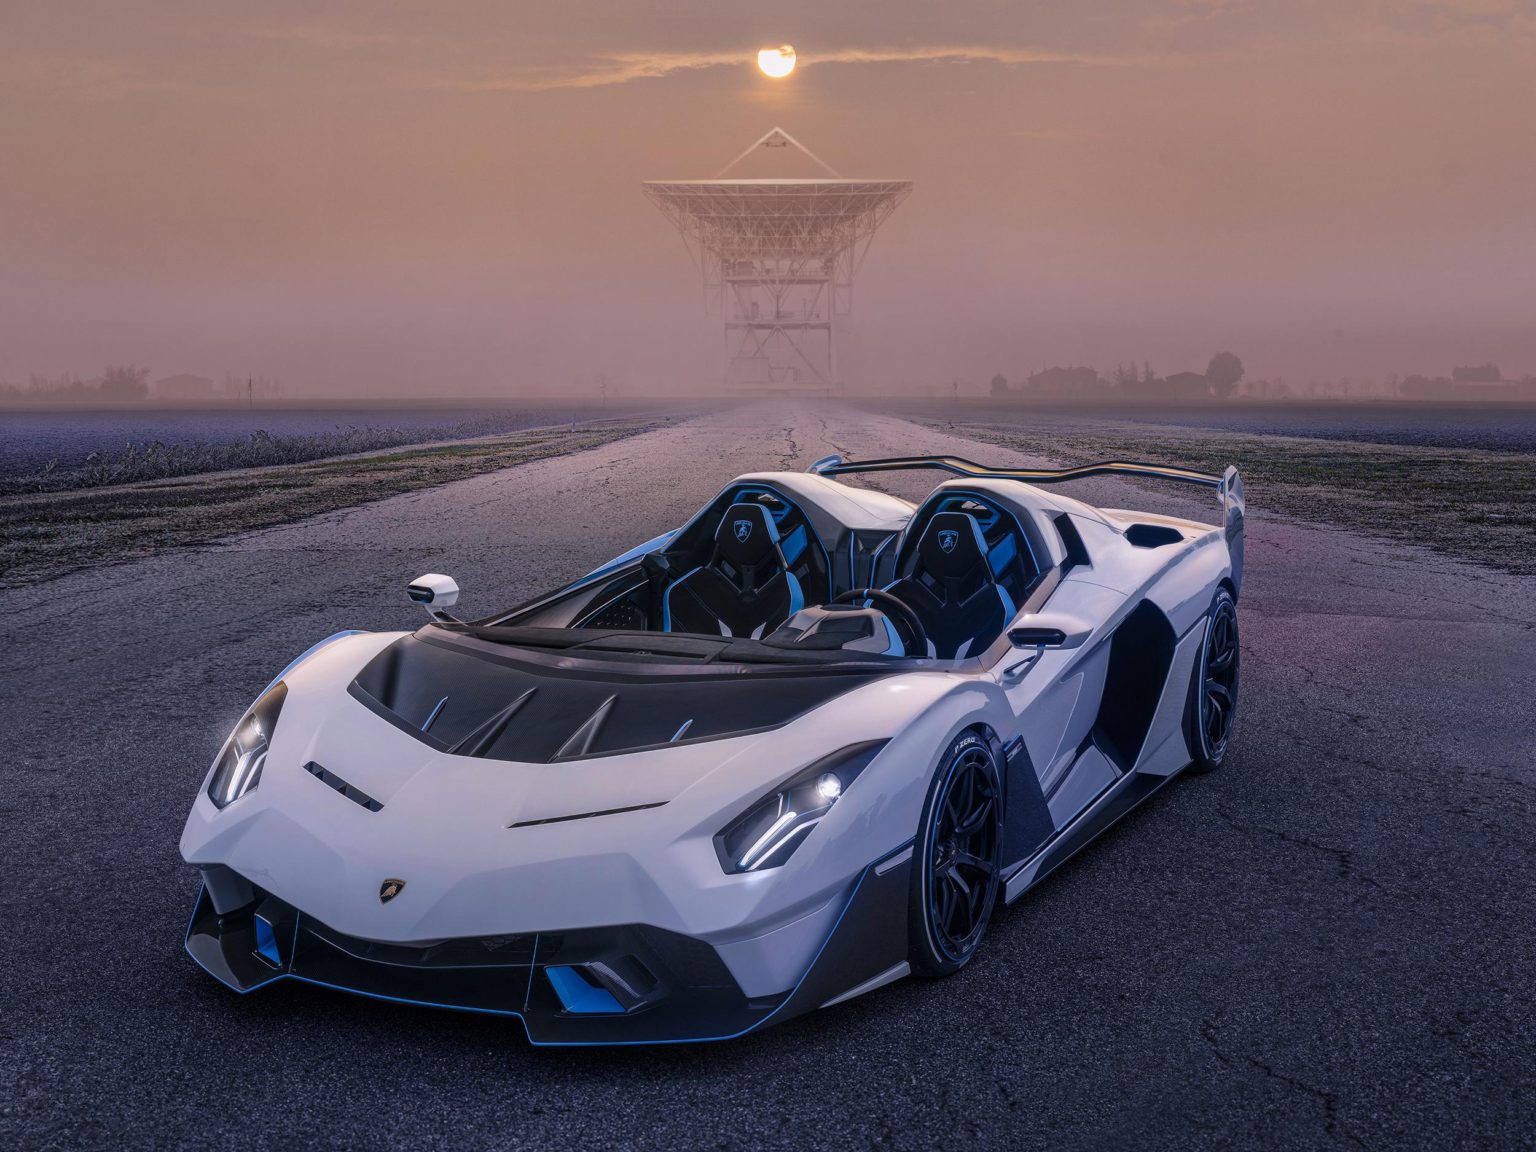 This unique car was built as a one-off for a special Lamborghini client.